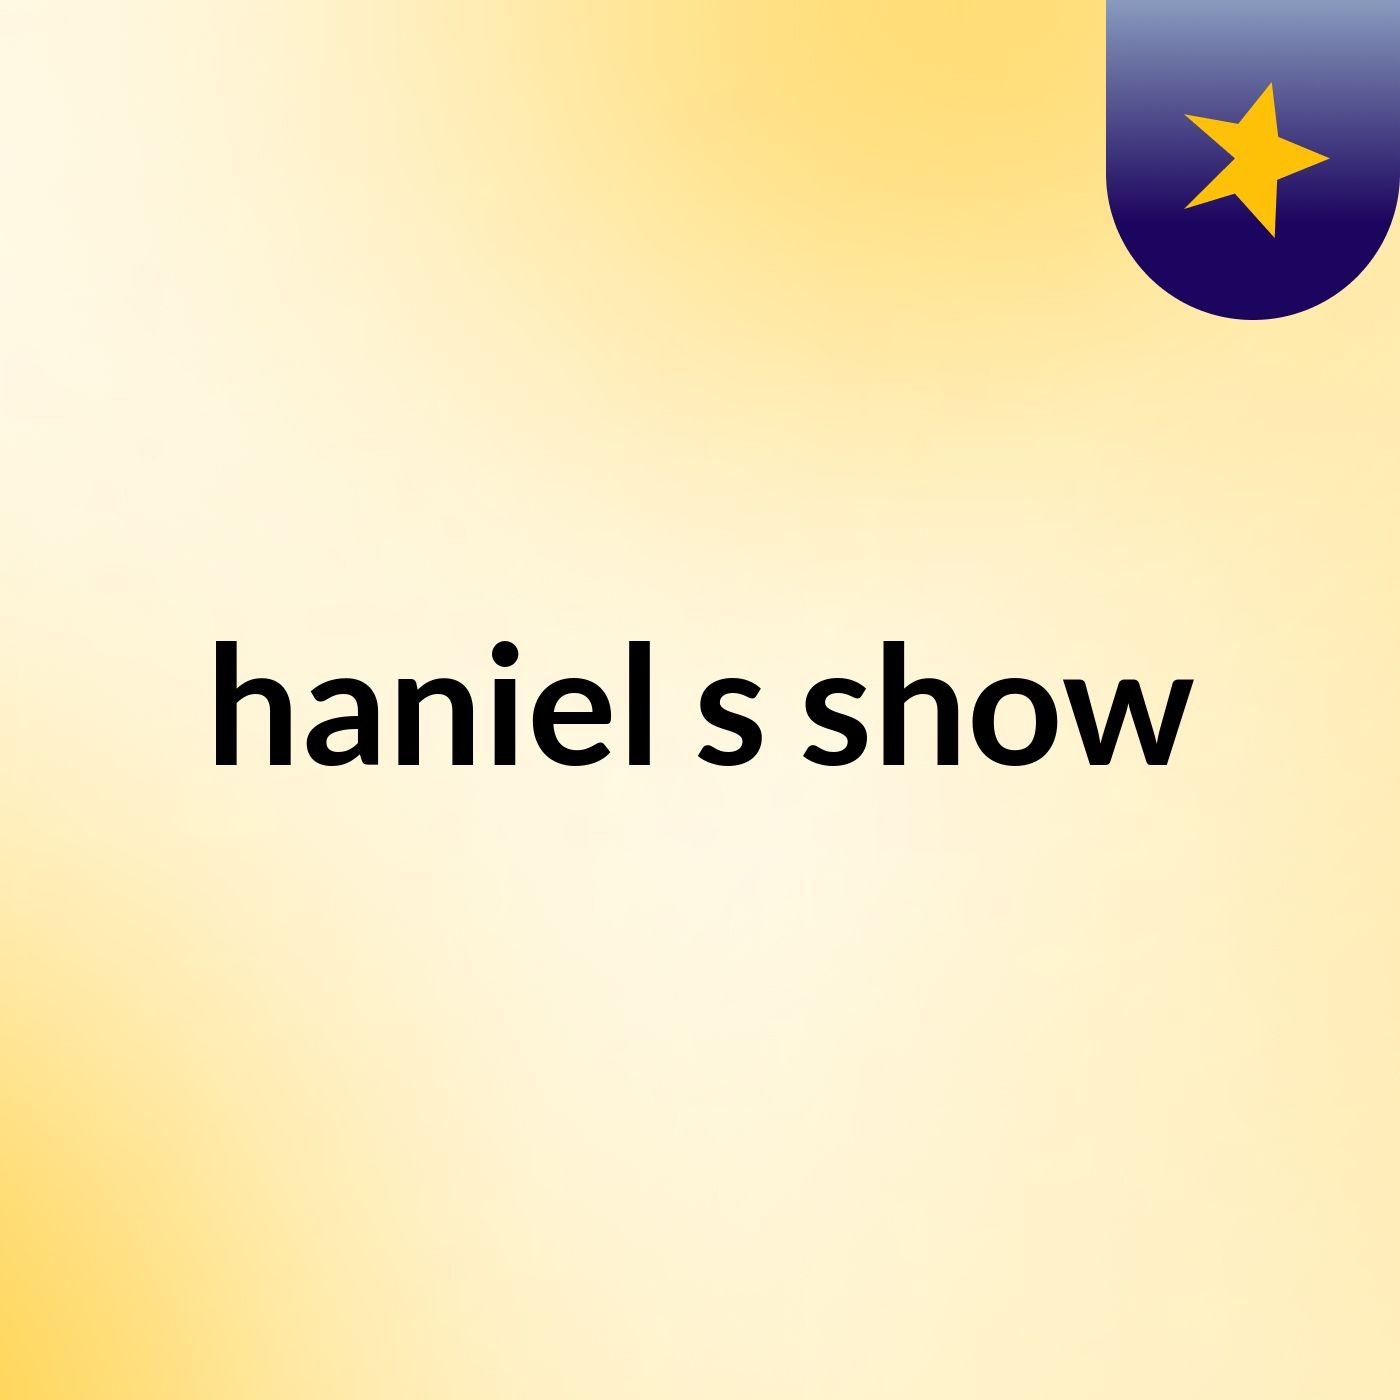 haniel's show